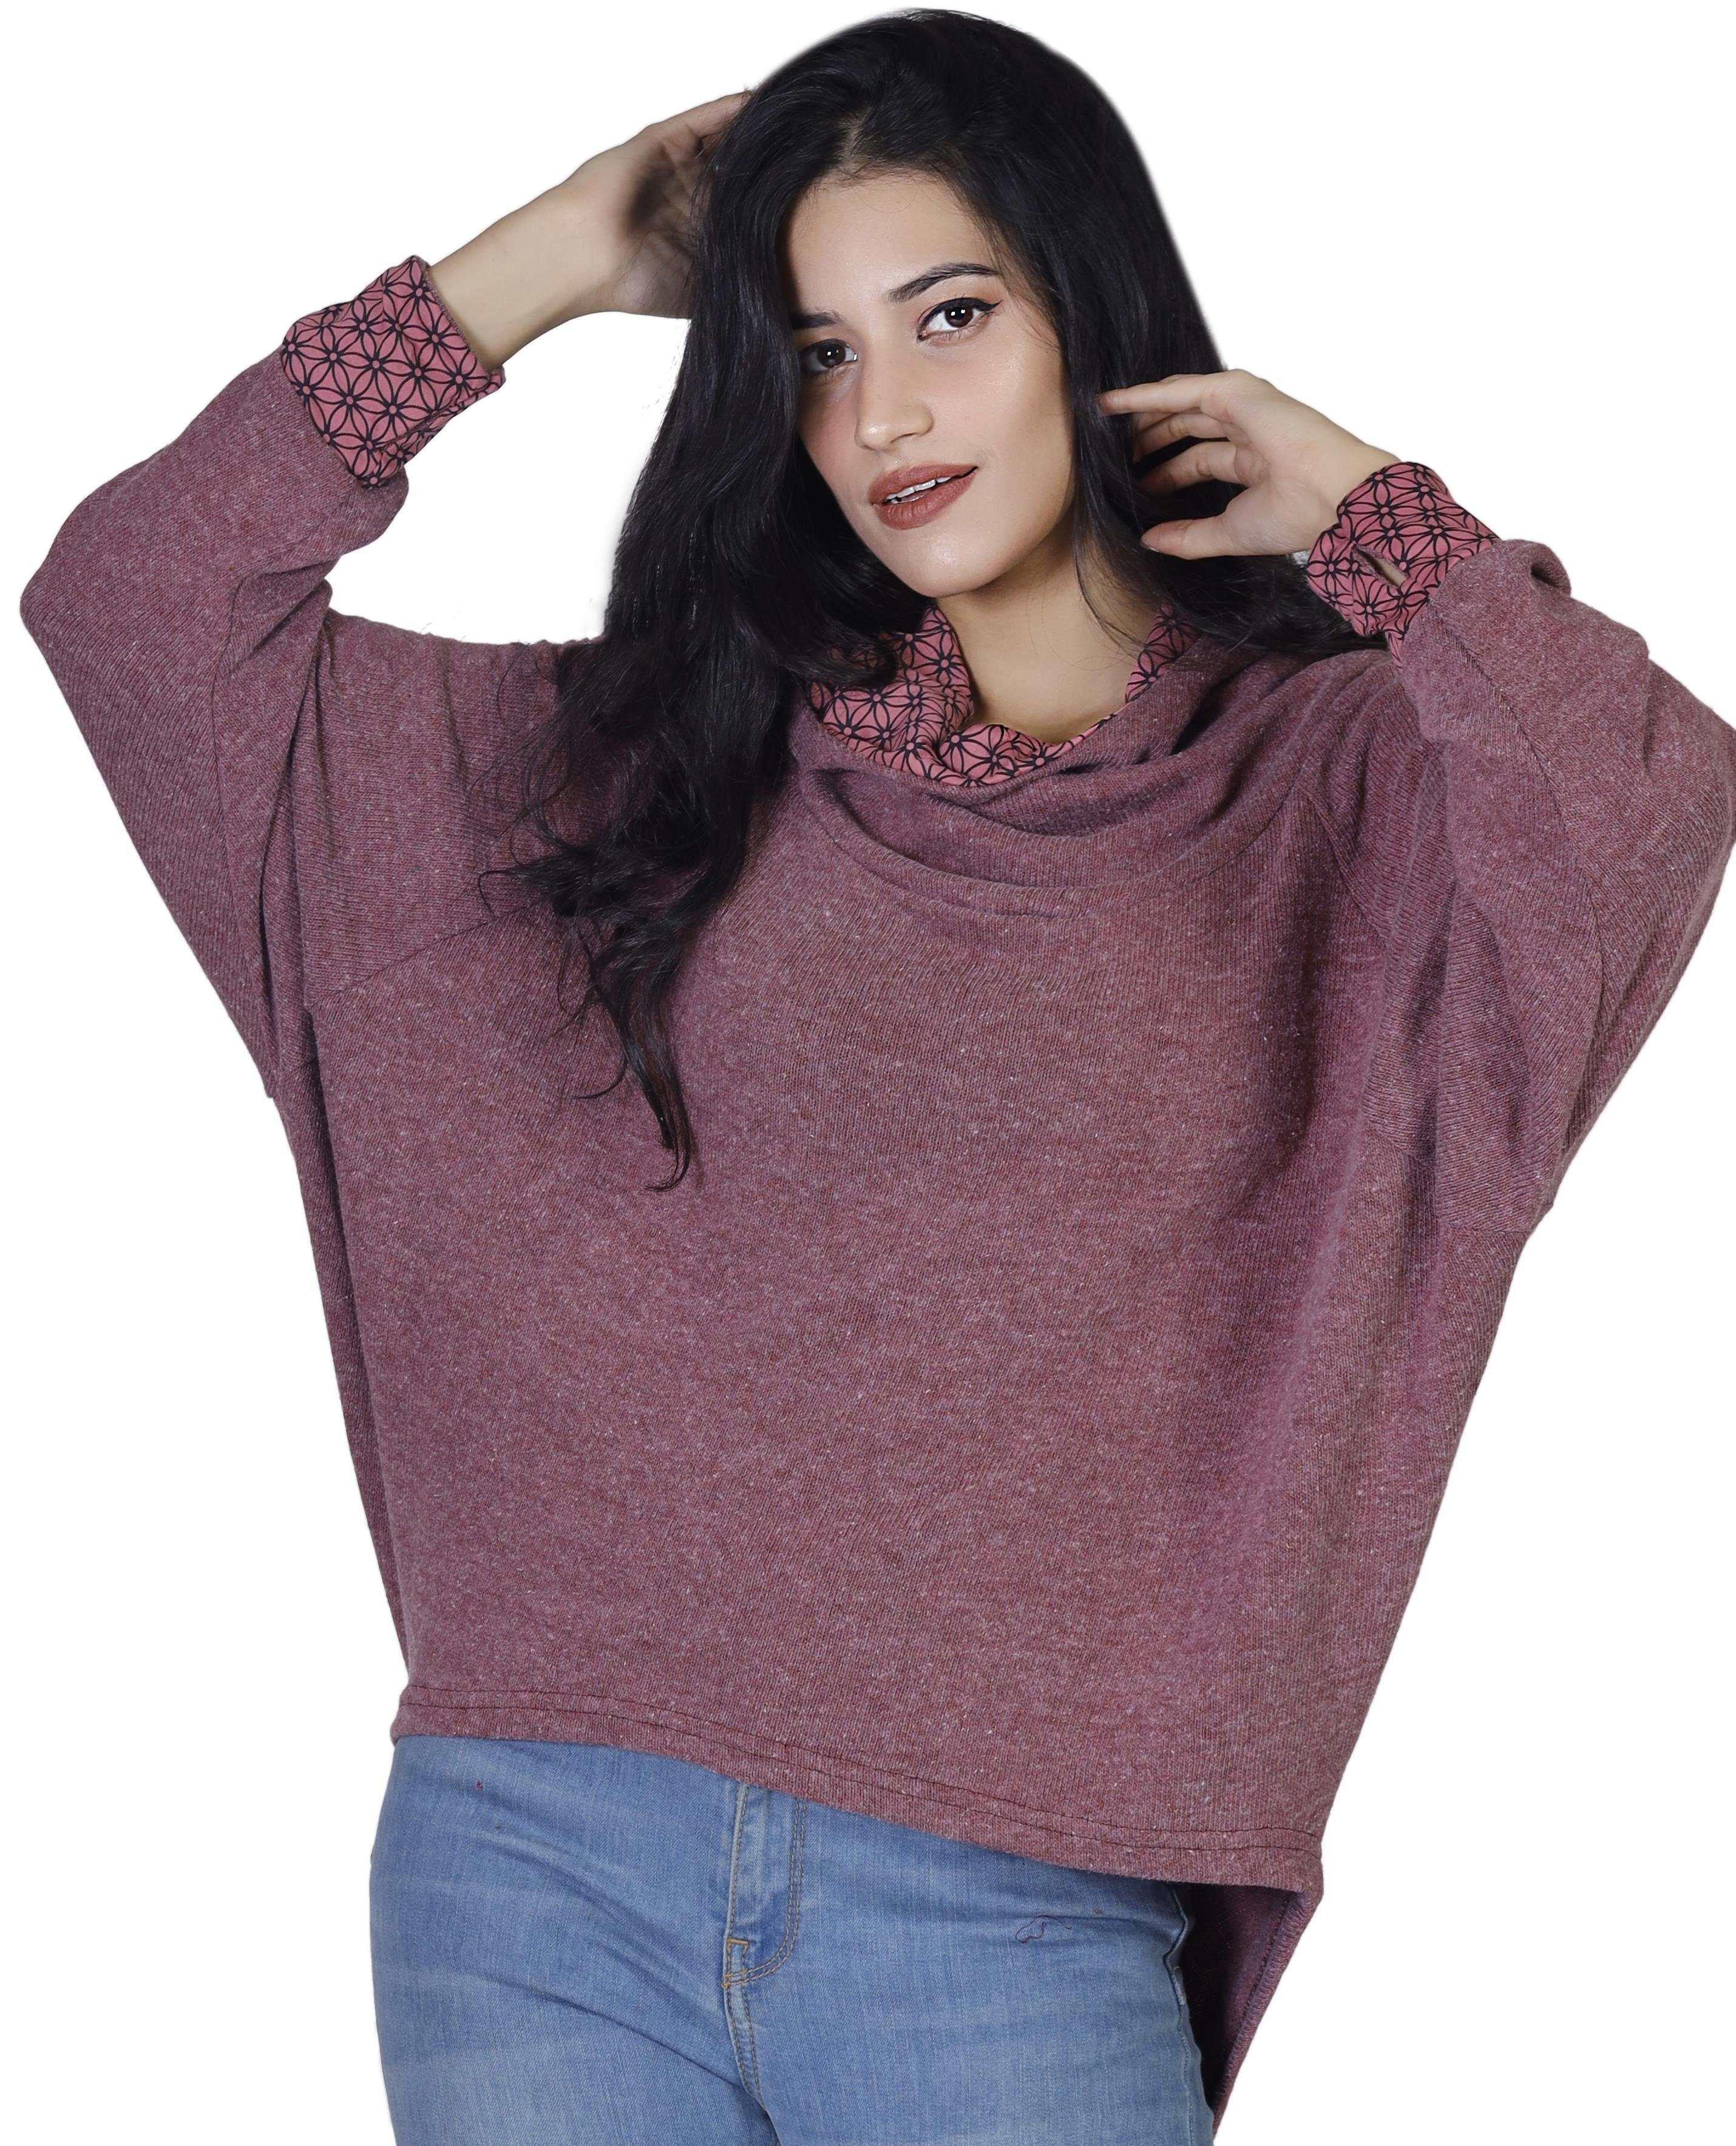 Sweatshirt, Guru-Shop -.. alternative Hoody, Kapuzenpullover Bekleidung Longsleeve Pullover, altrosa